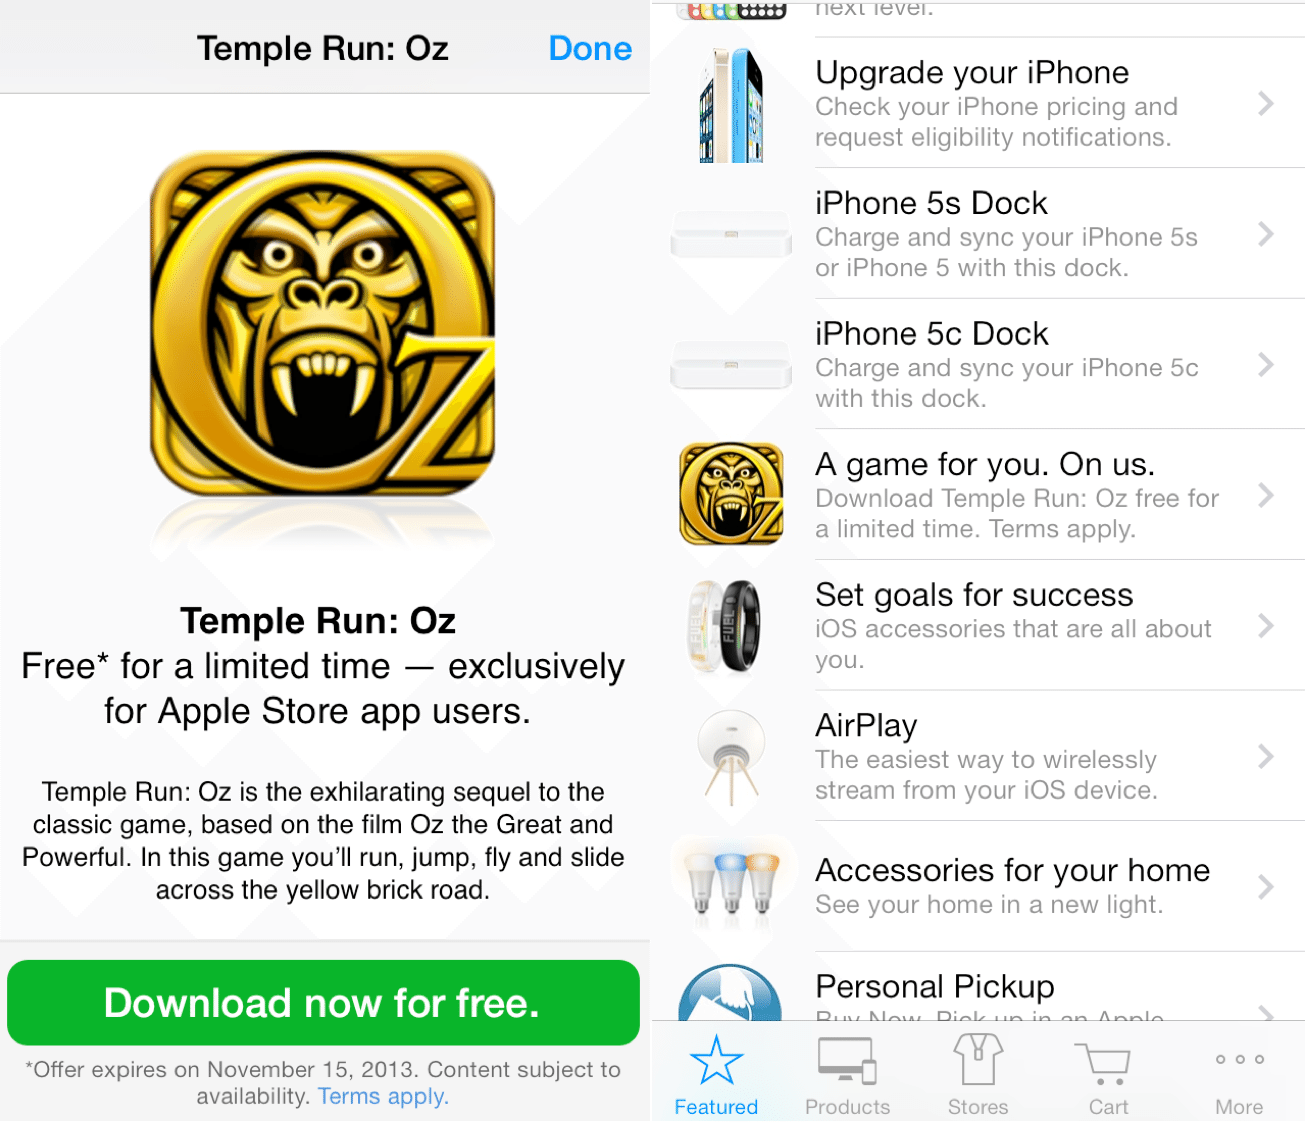 Temple run oz now free via apple store app